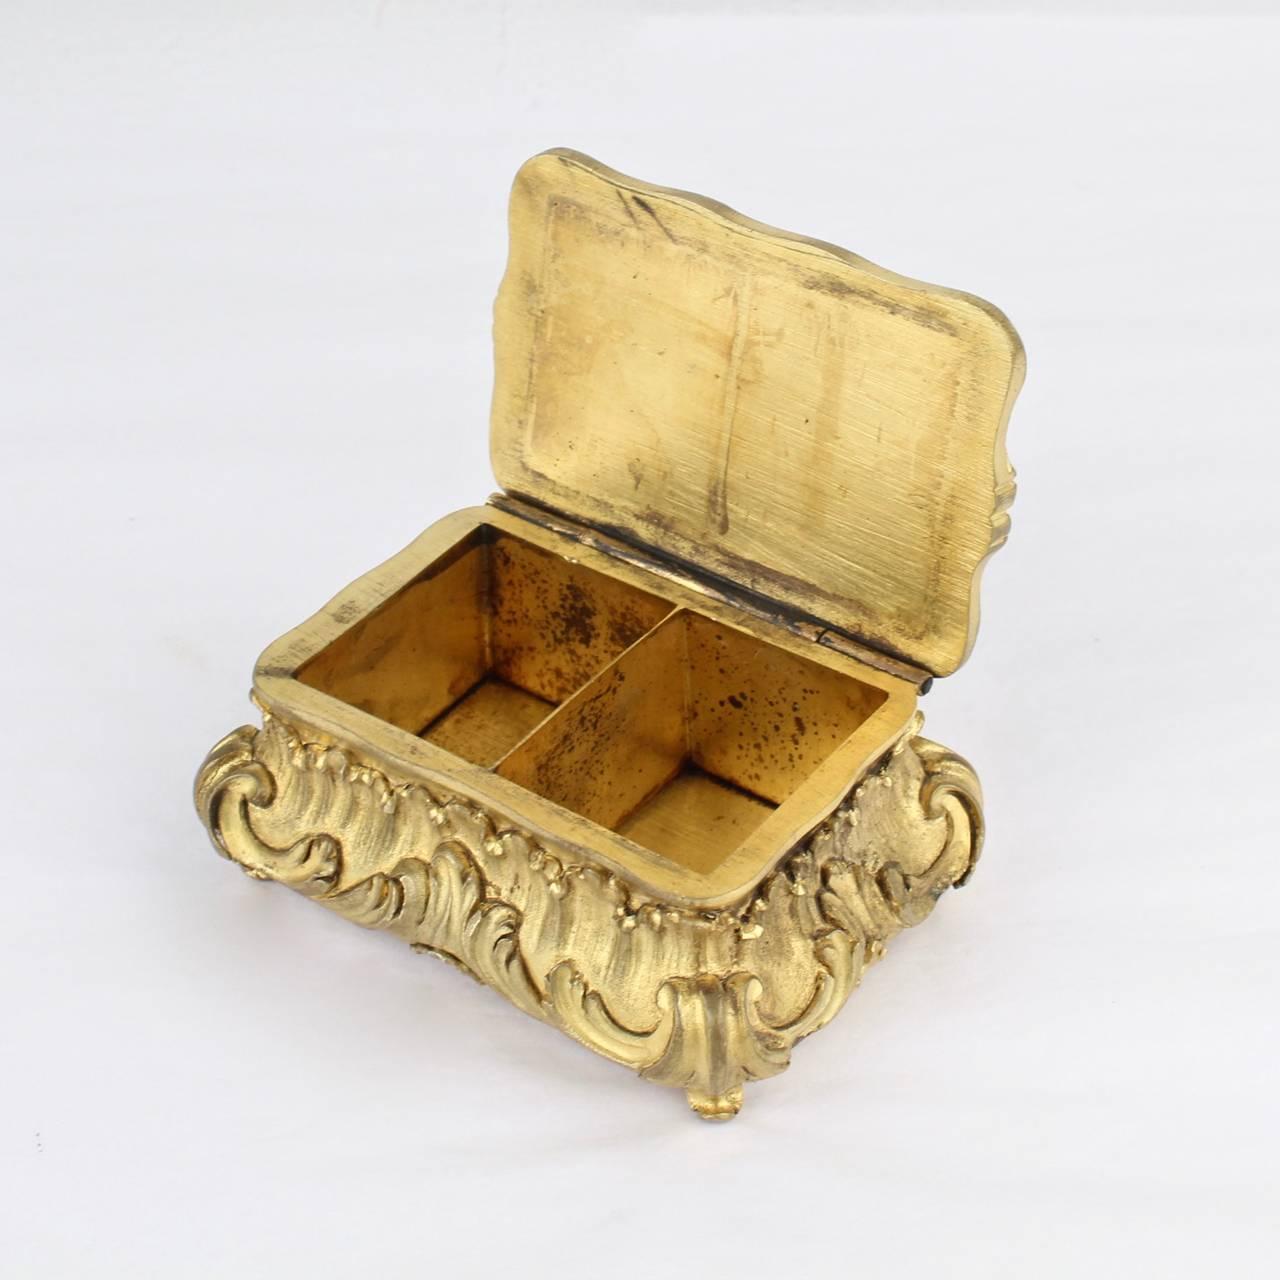 Antique Small Doré Gilt Bronze Table Box or Casket, 19th Century (19. Jahrhundert)